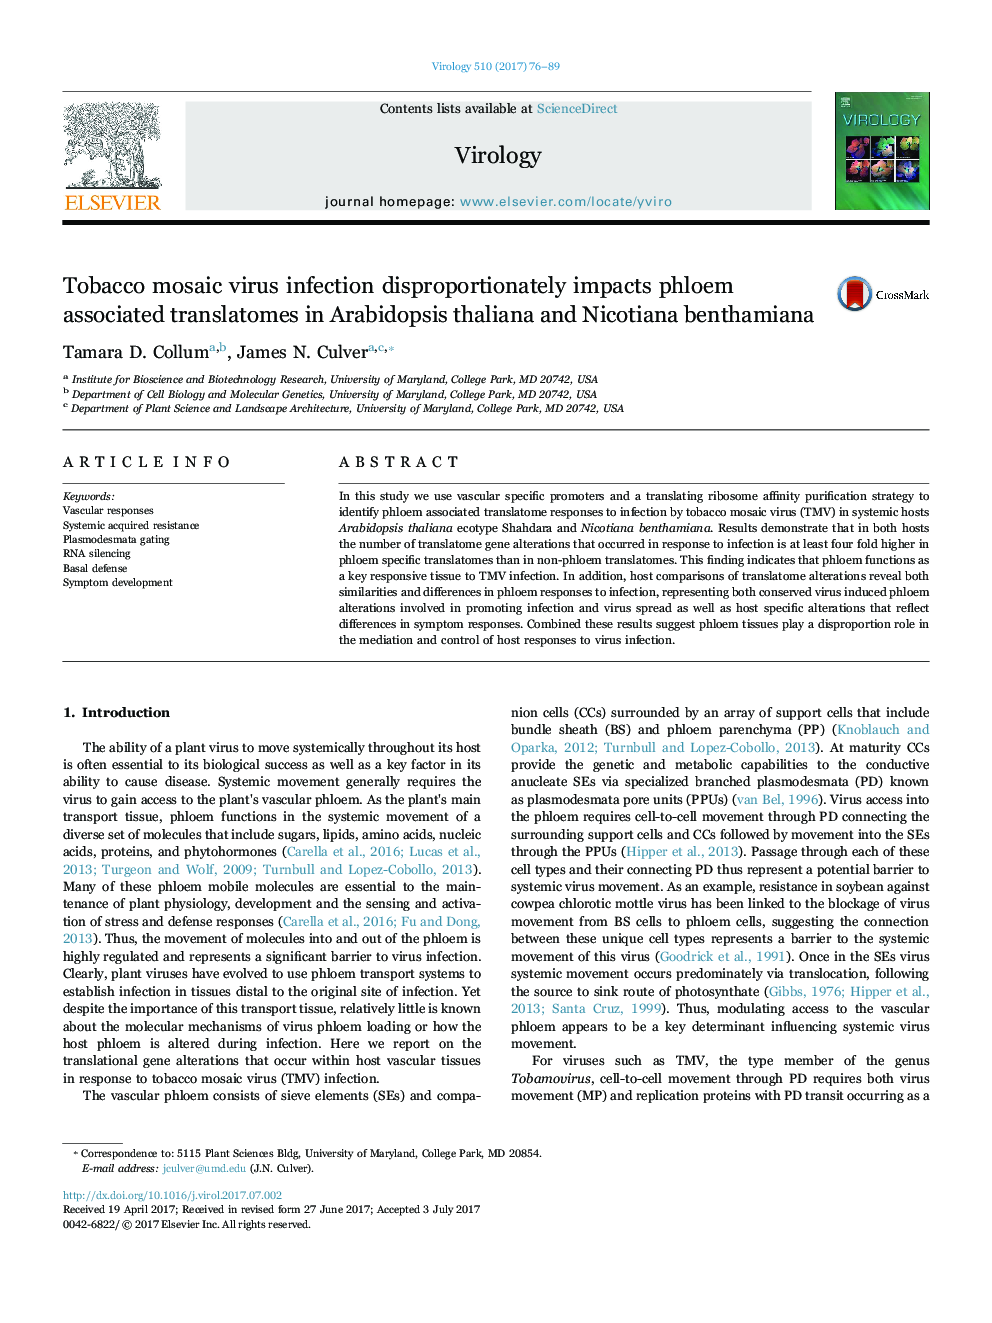 Tobacco mosaic virus infection disproportionately impacts phloem associated translatomes in Arabidopsis thaliana and Nicotiana benthamiana